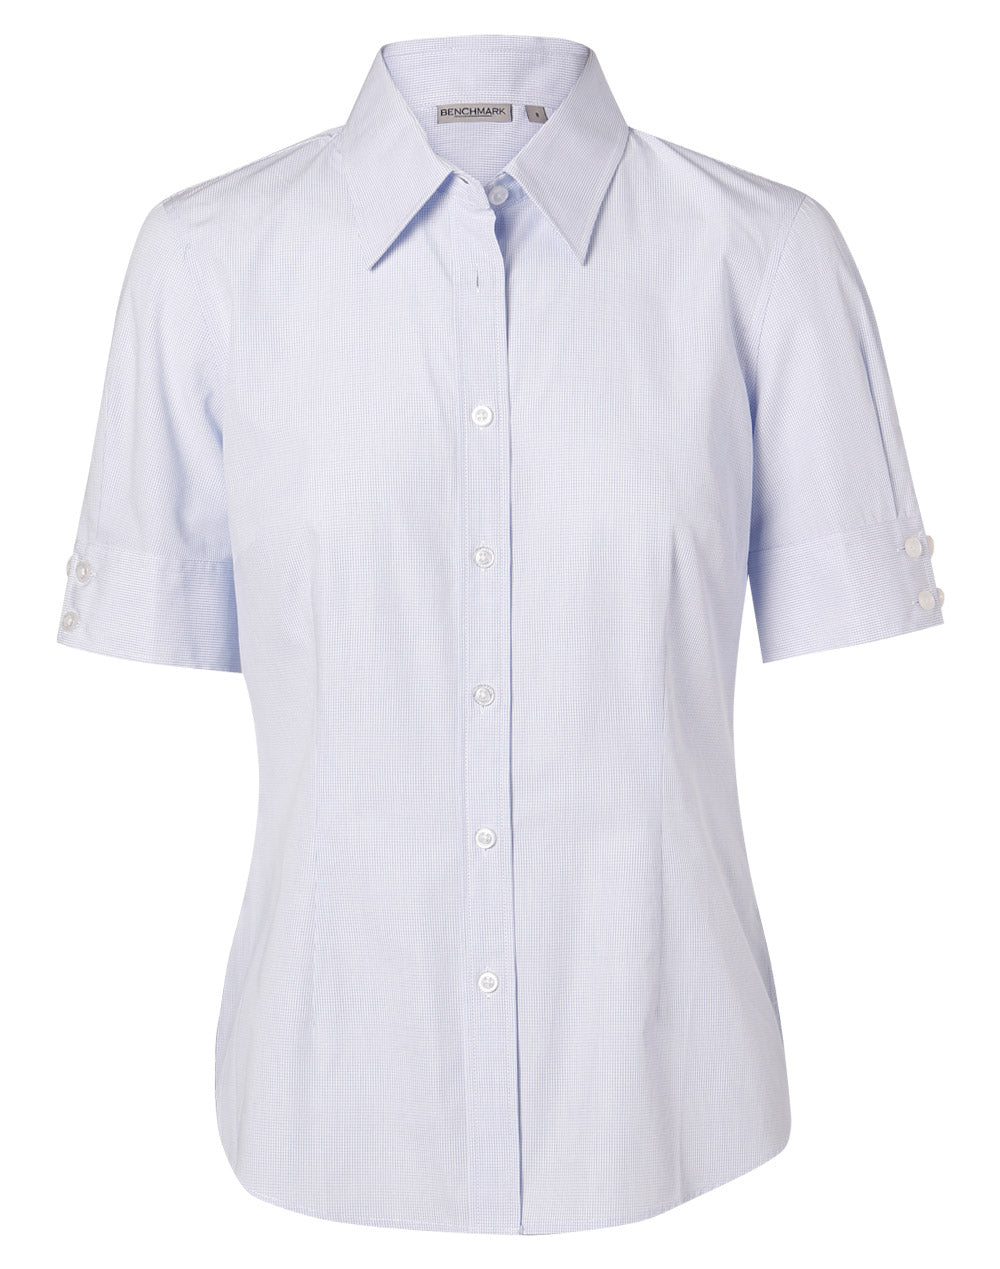 Benchmark M8360S Women's Mini Check Short Sleeve Shirt